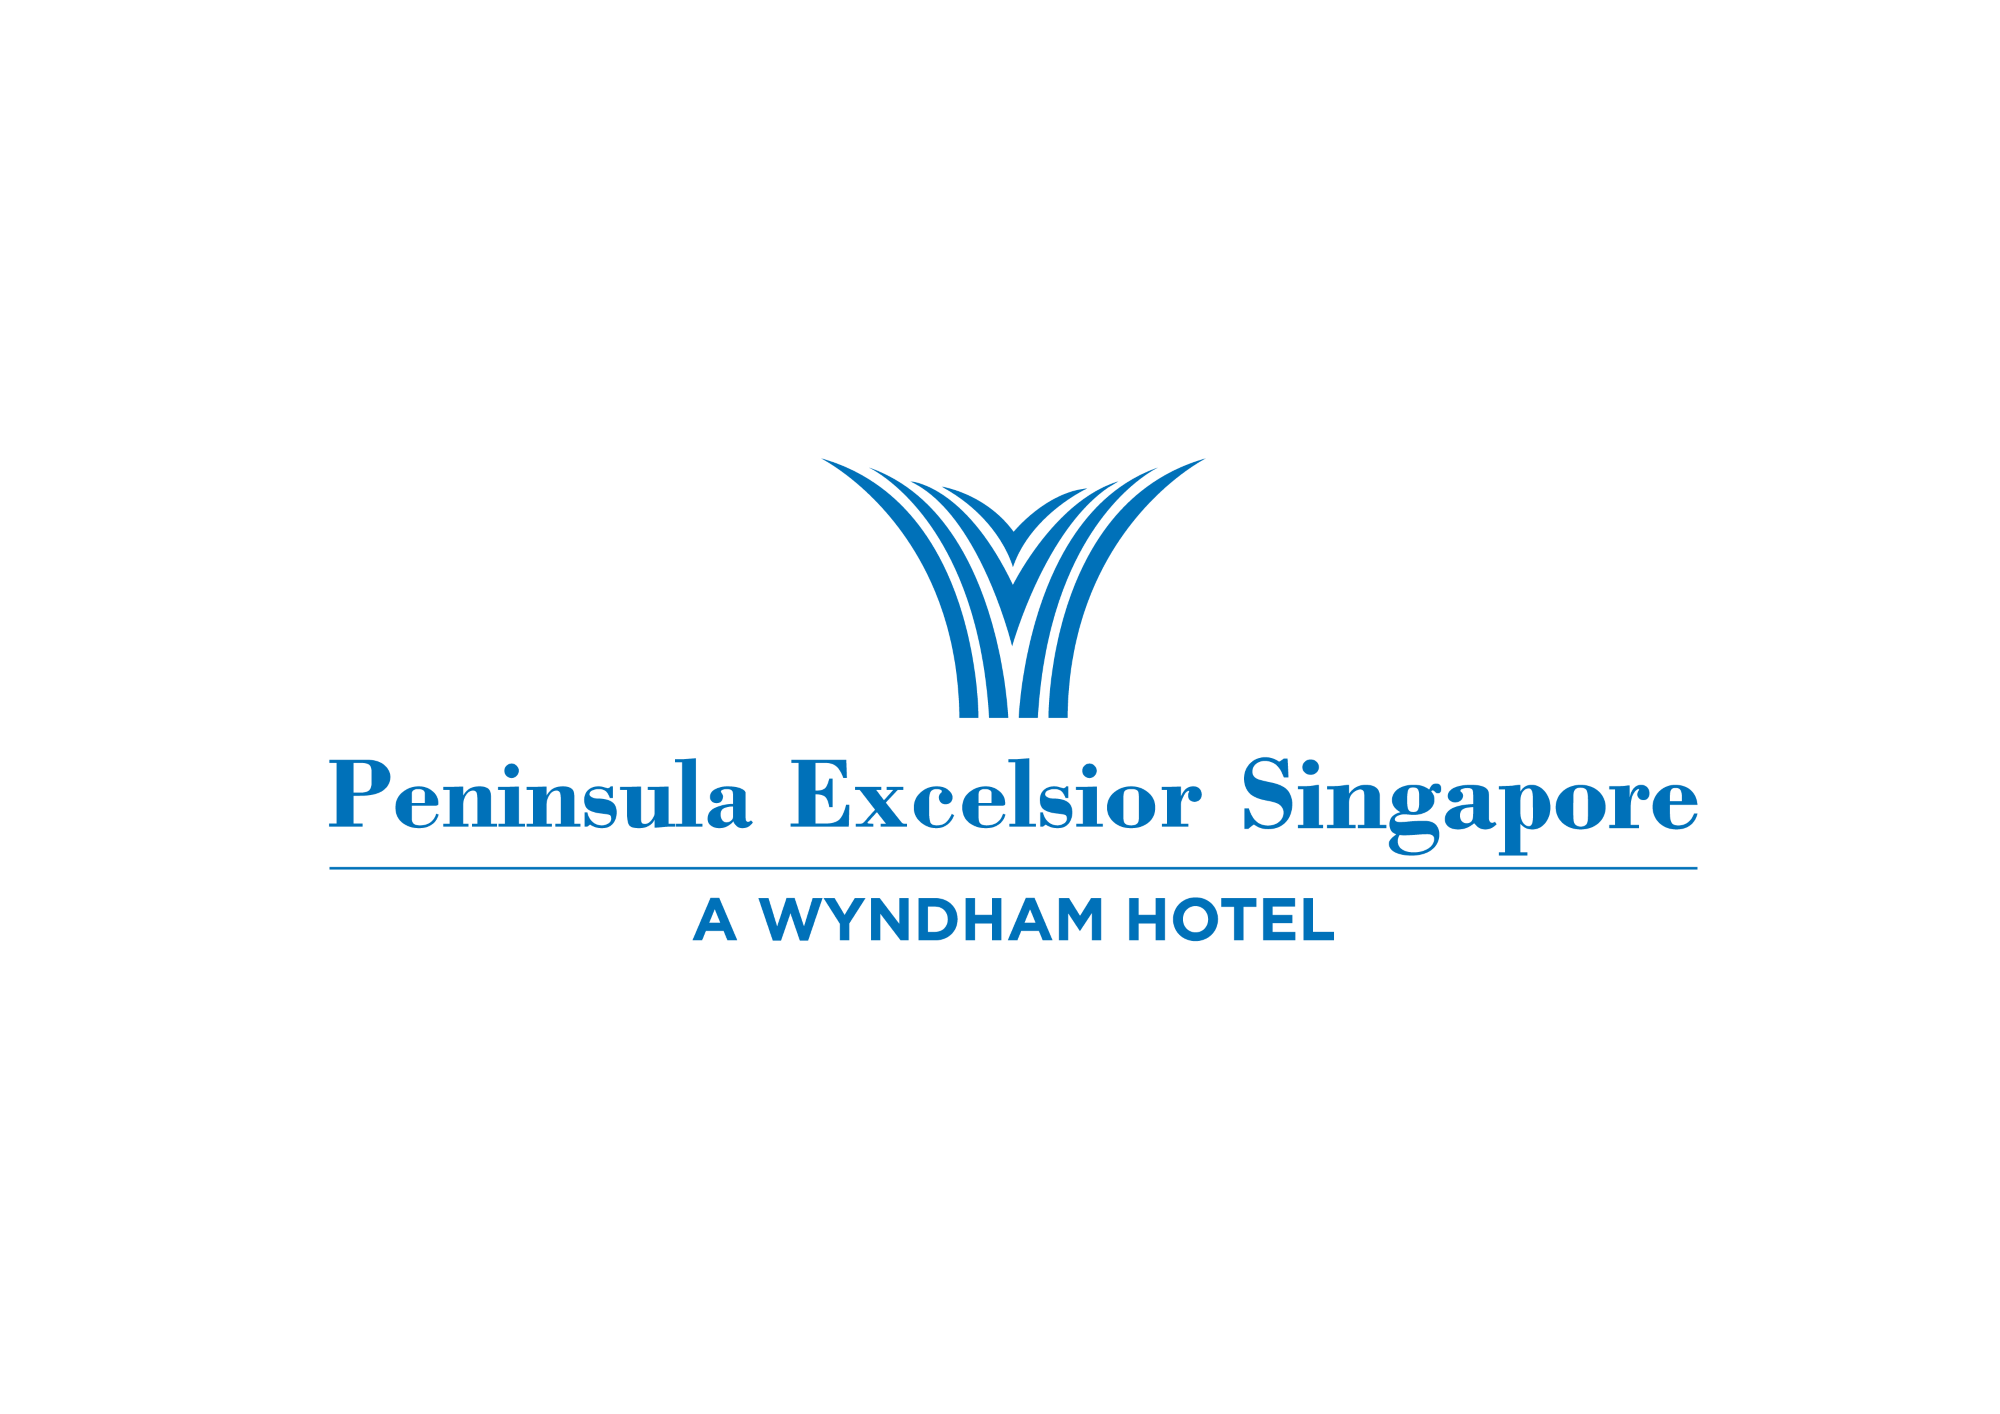 Peninsula Excelsior Singapore, A Wyndham Hotel logo